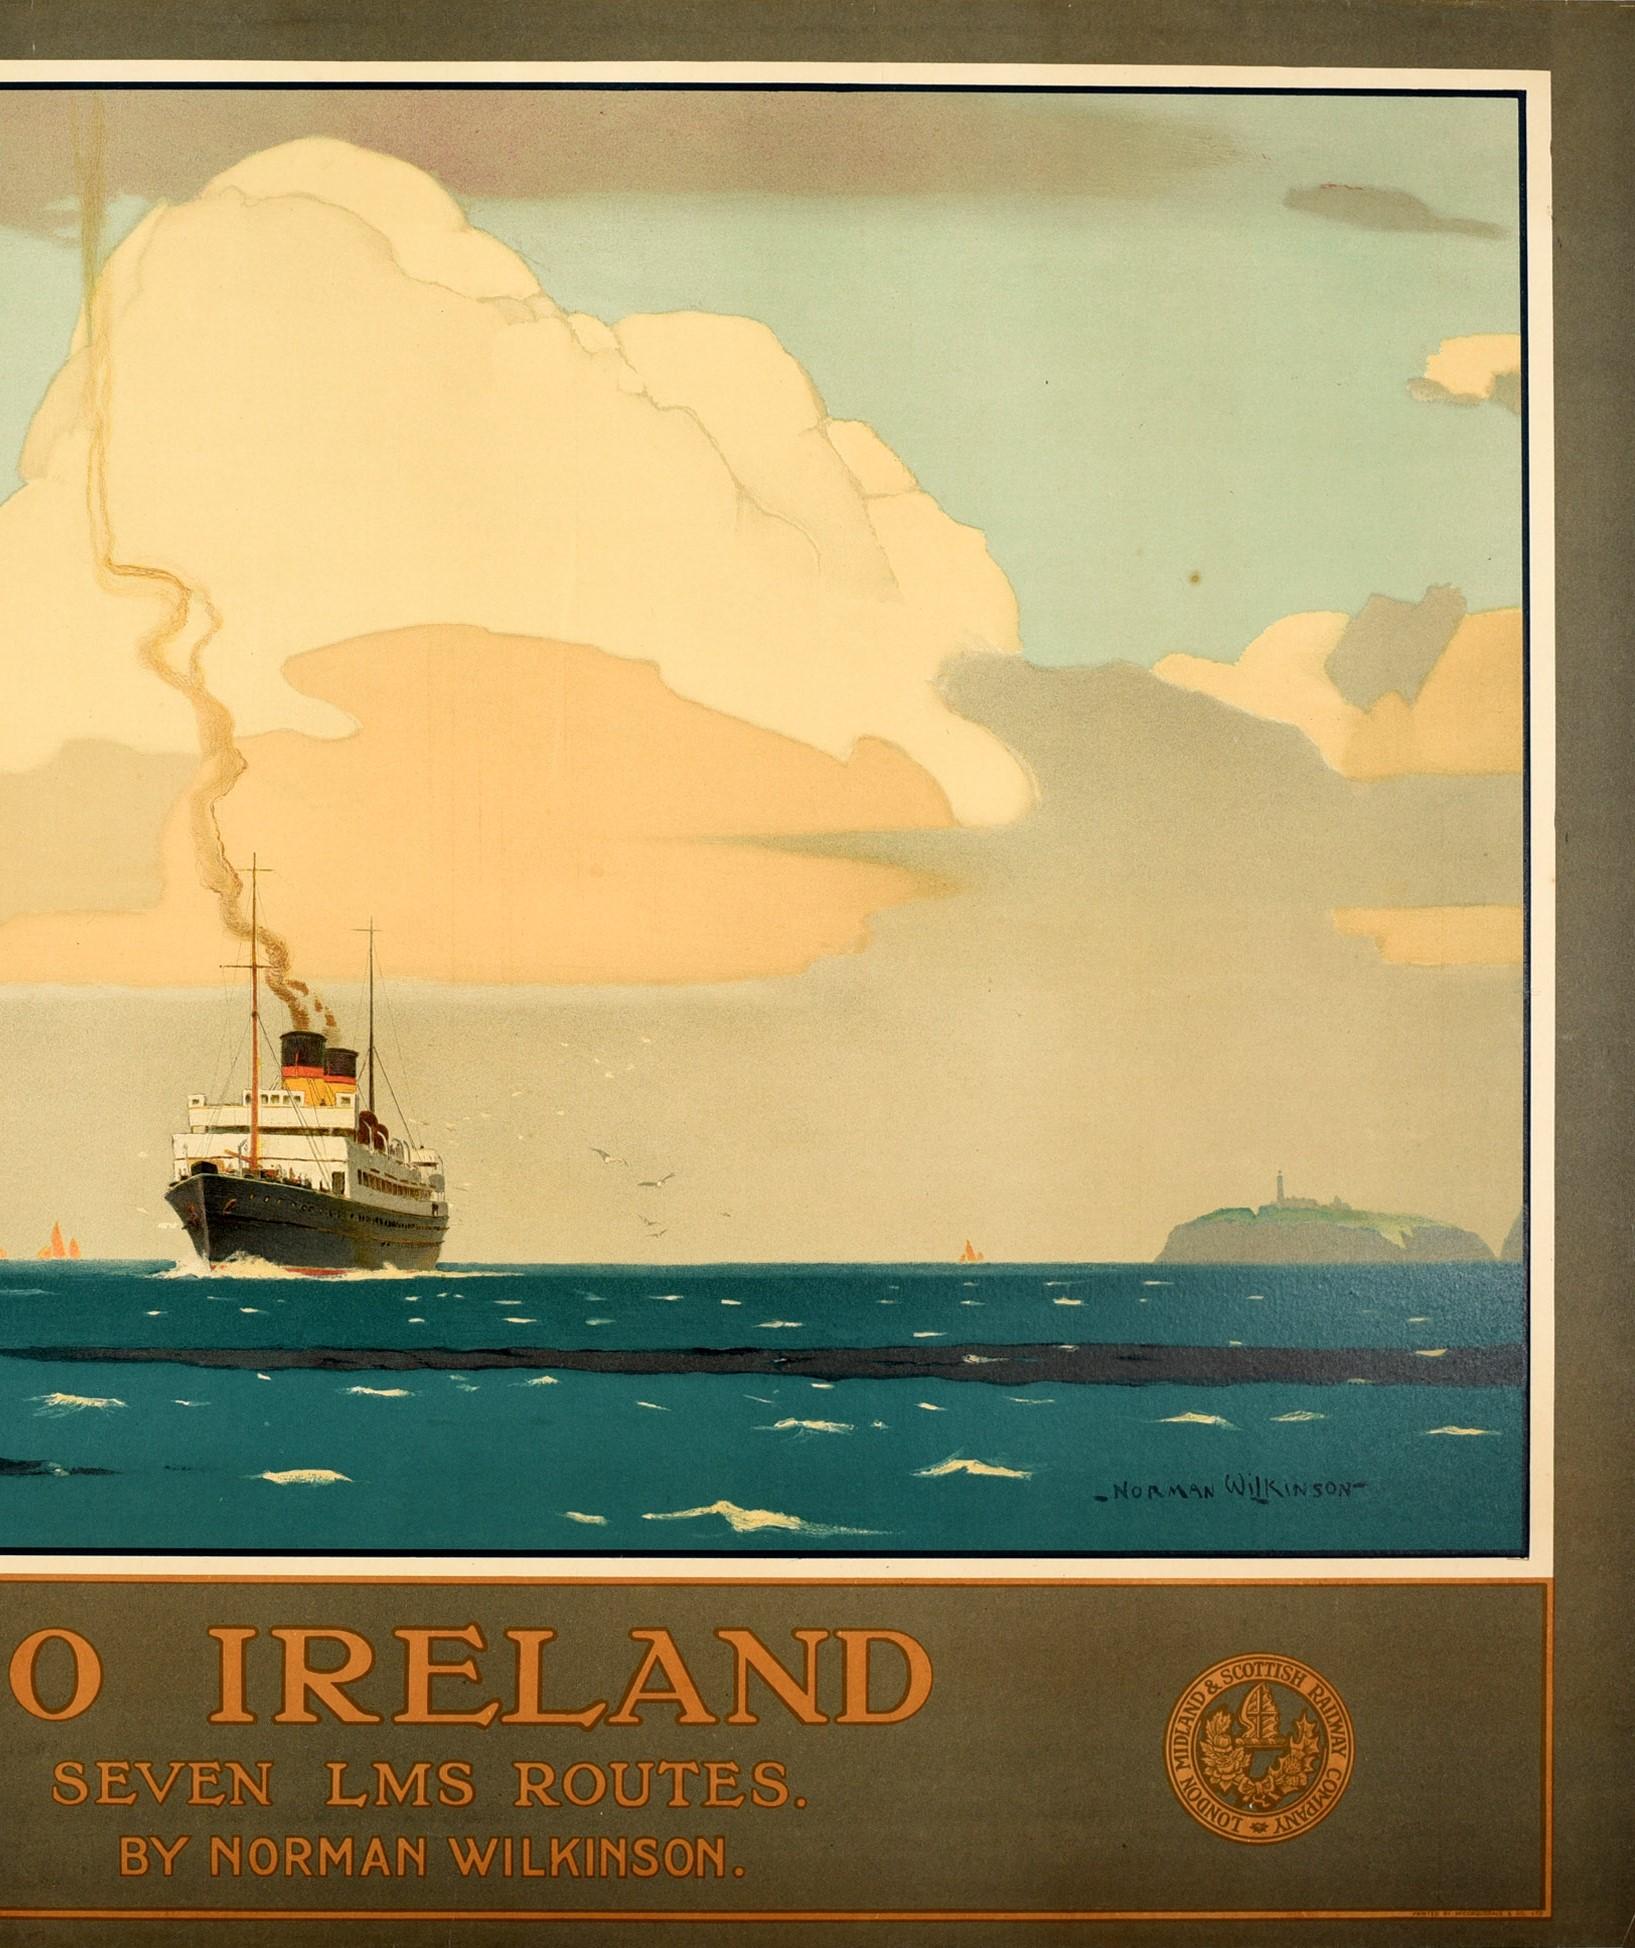 British Original Vintage Railway Poster To Ireland Seven LMS Routes Ft. Irish Sea Ferry